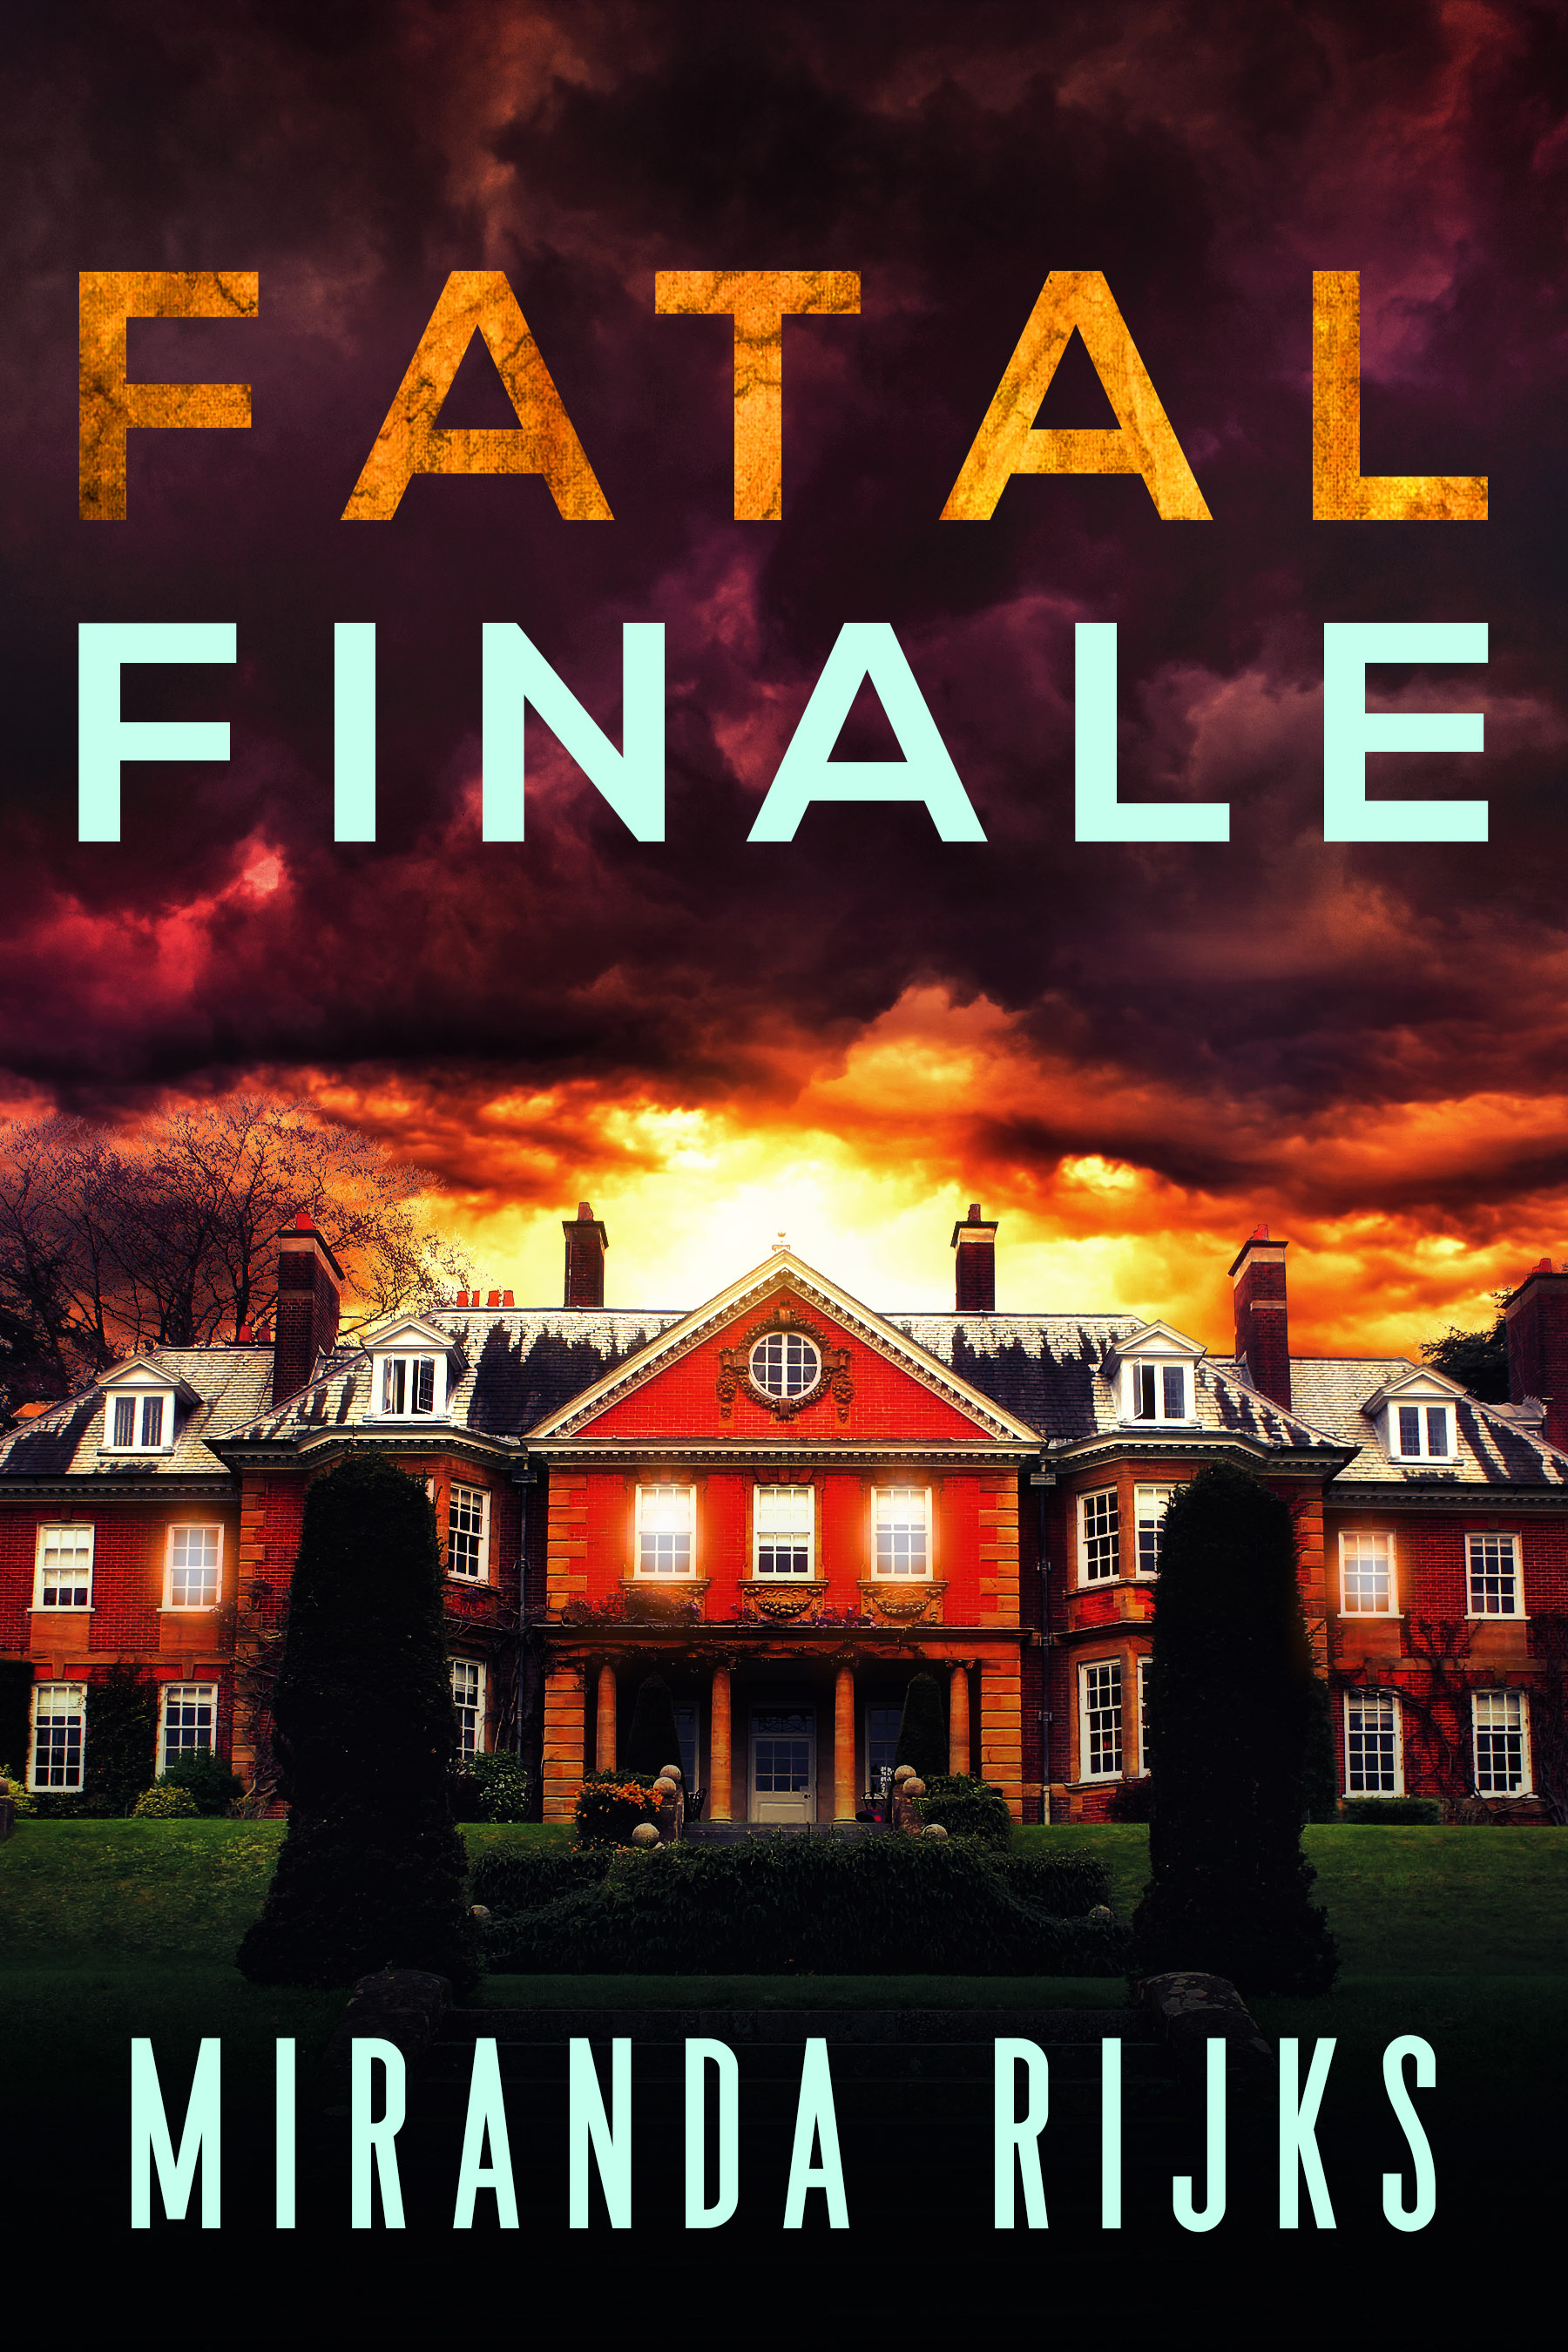 Fatal final. The New neighbour by Miranda Rijks.